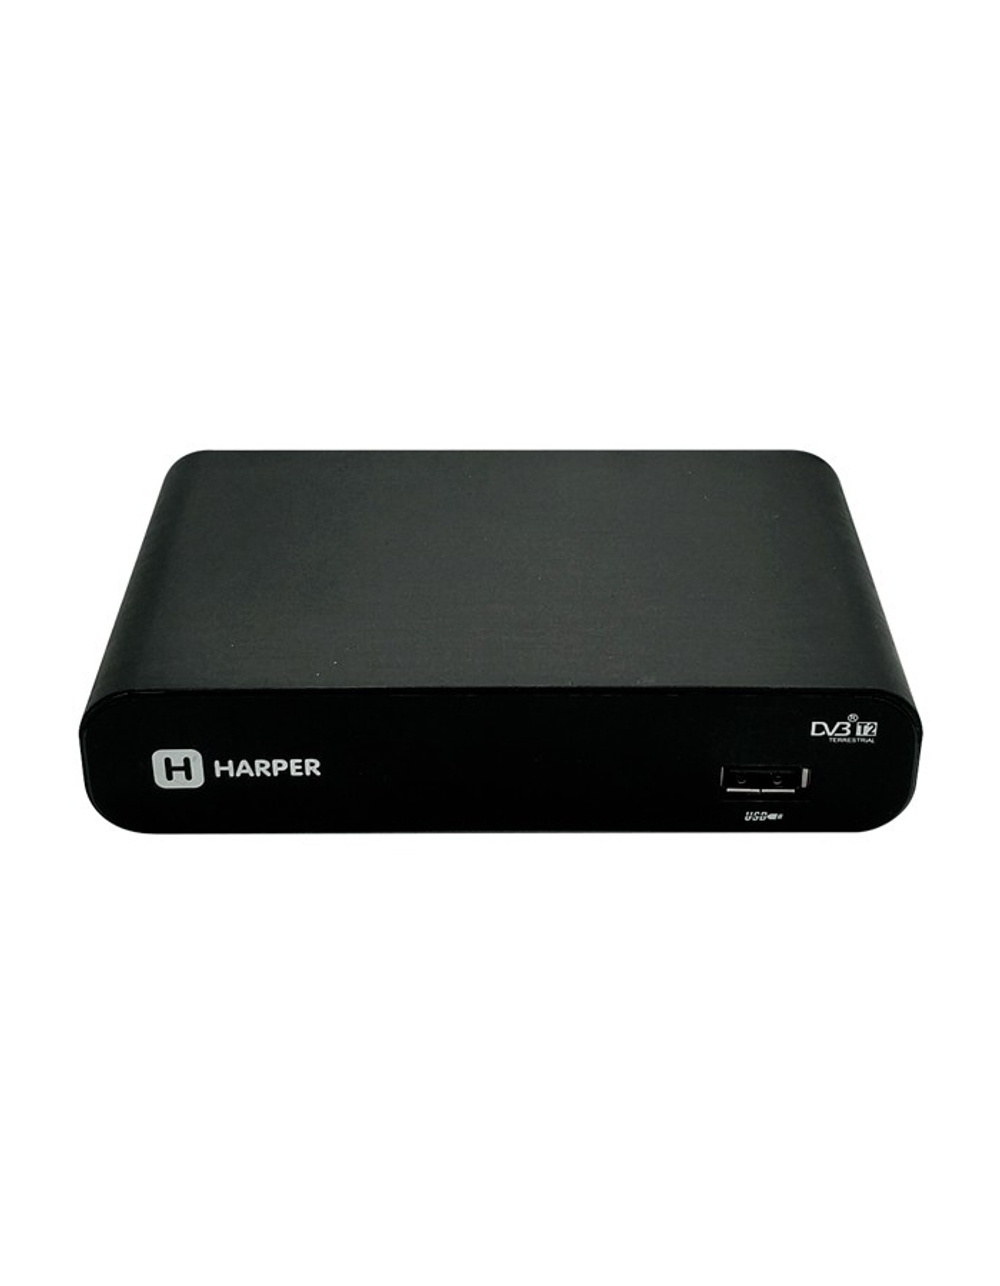 HARPER HDT2-1108 (DVB-T2 HD / SD. Электронный гид и функция Родительский контроль. Видео рекордер для записи телевизионных программ)